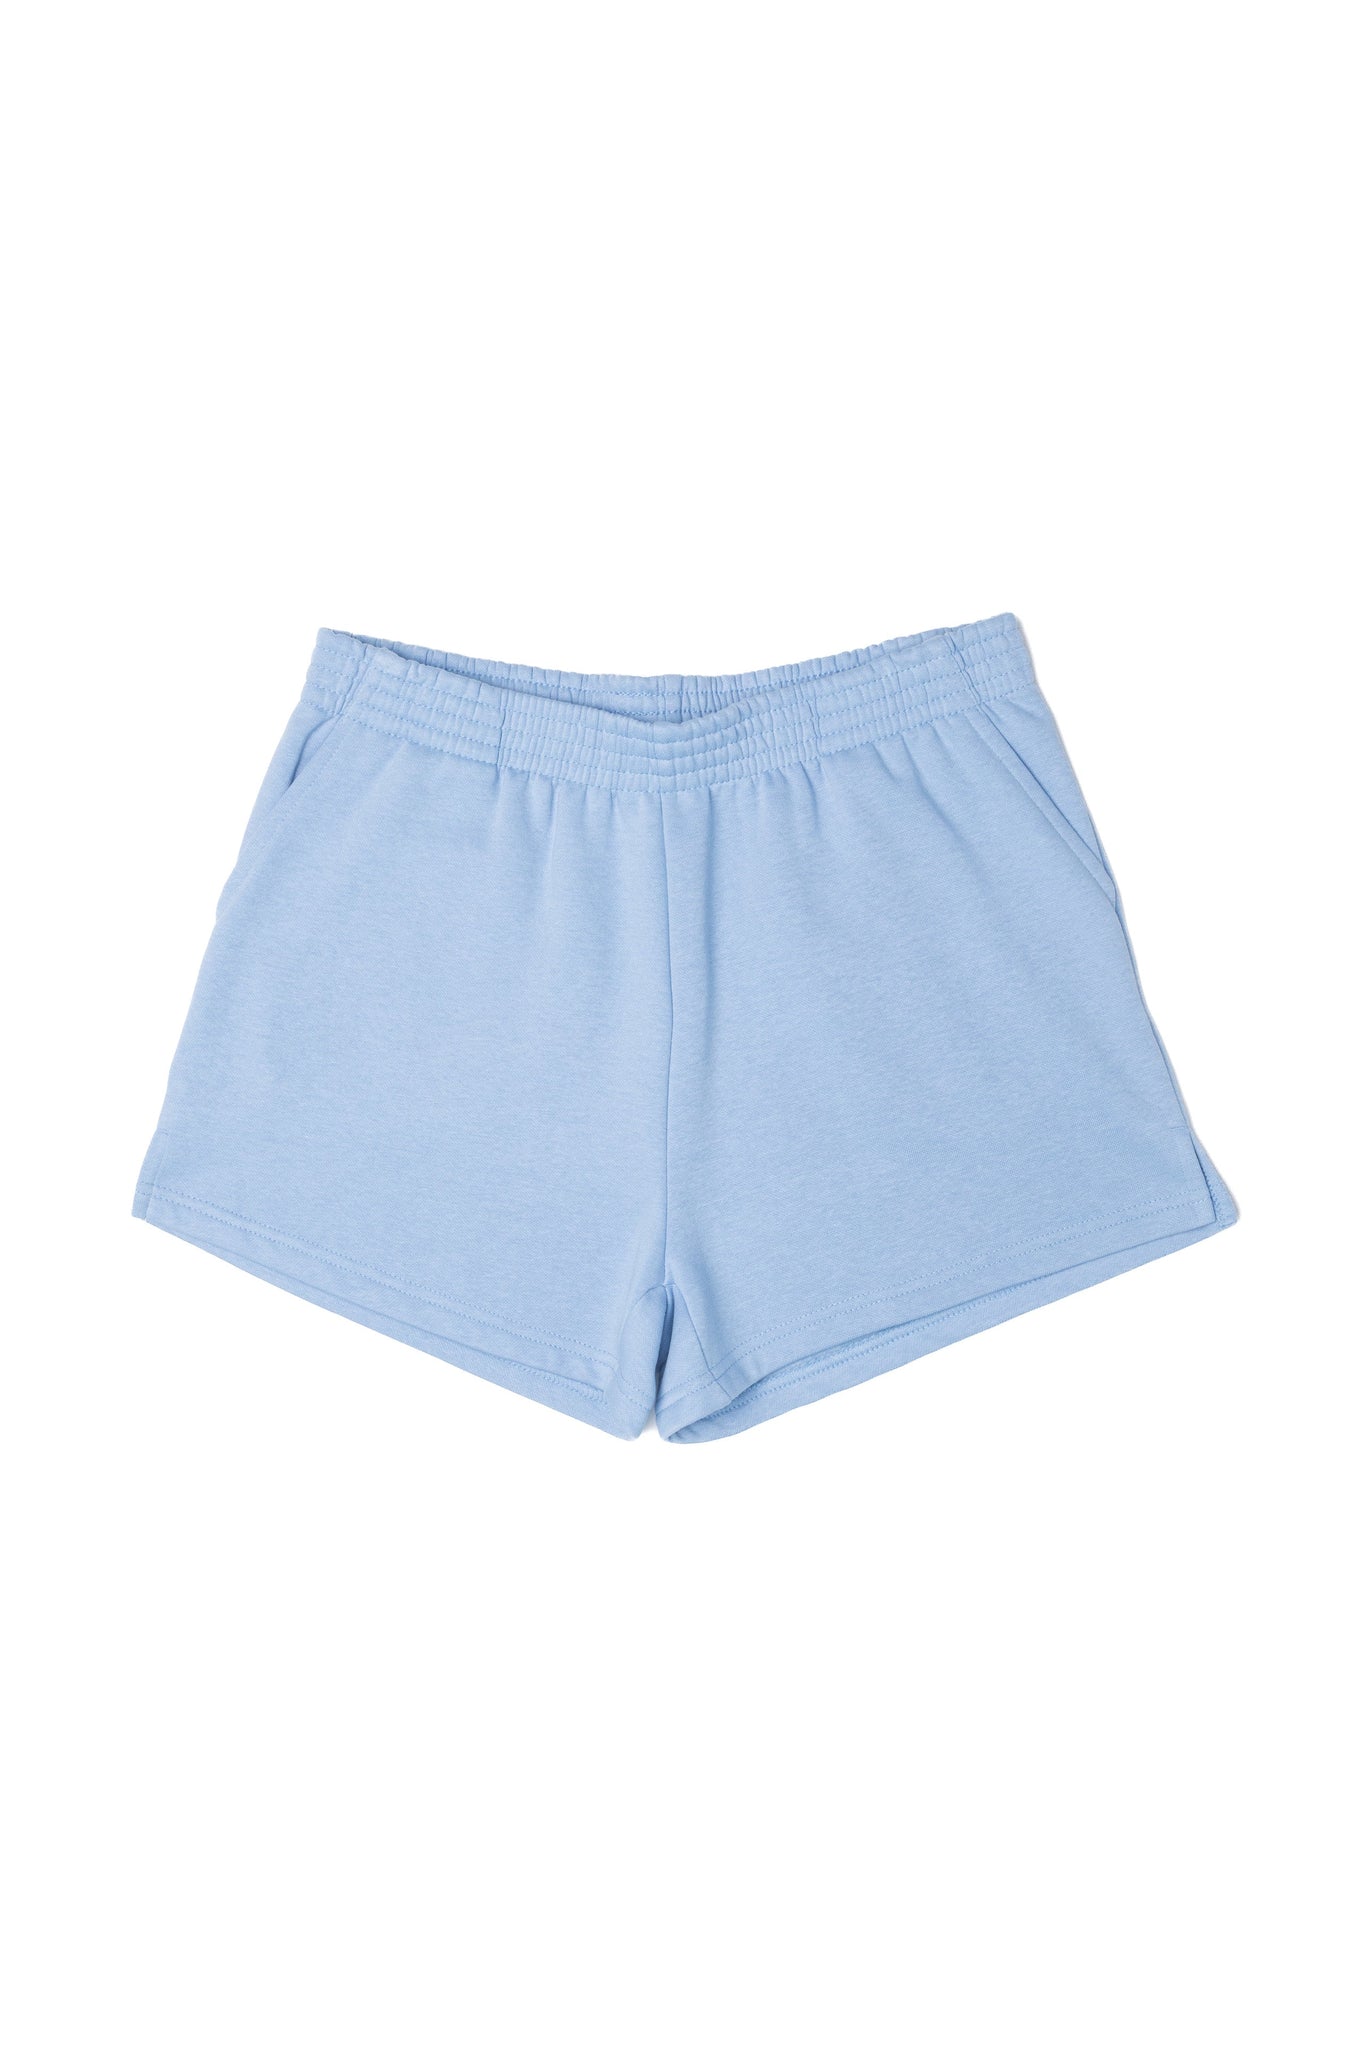 HERO - 7020 3’ Sweatshorts - Sky Blue Shorts